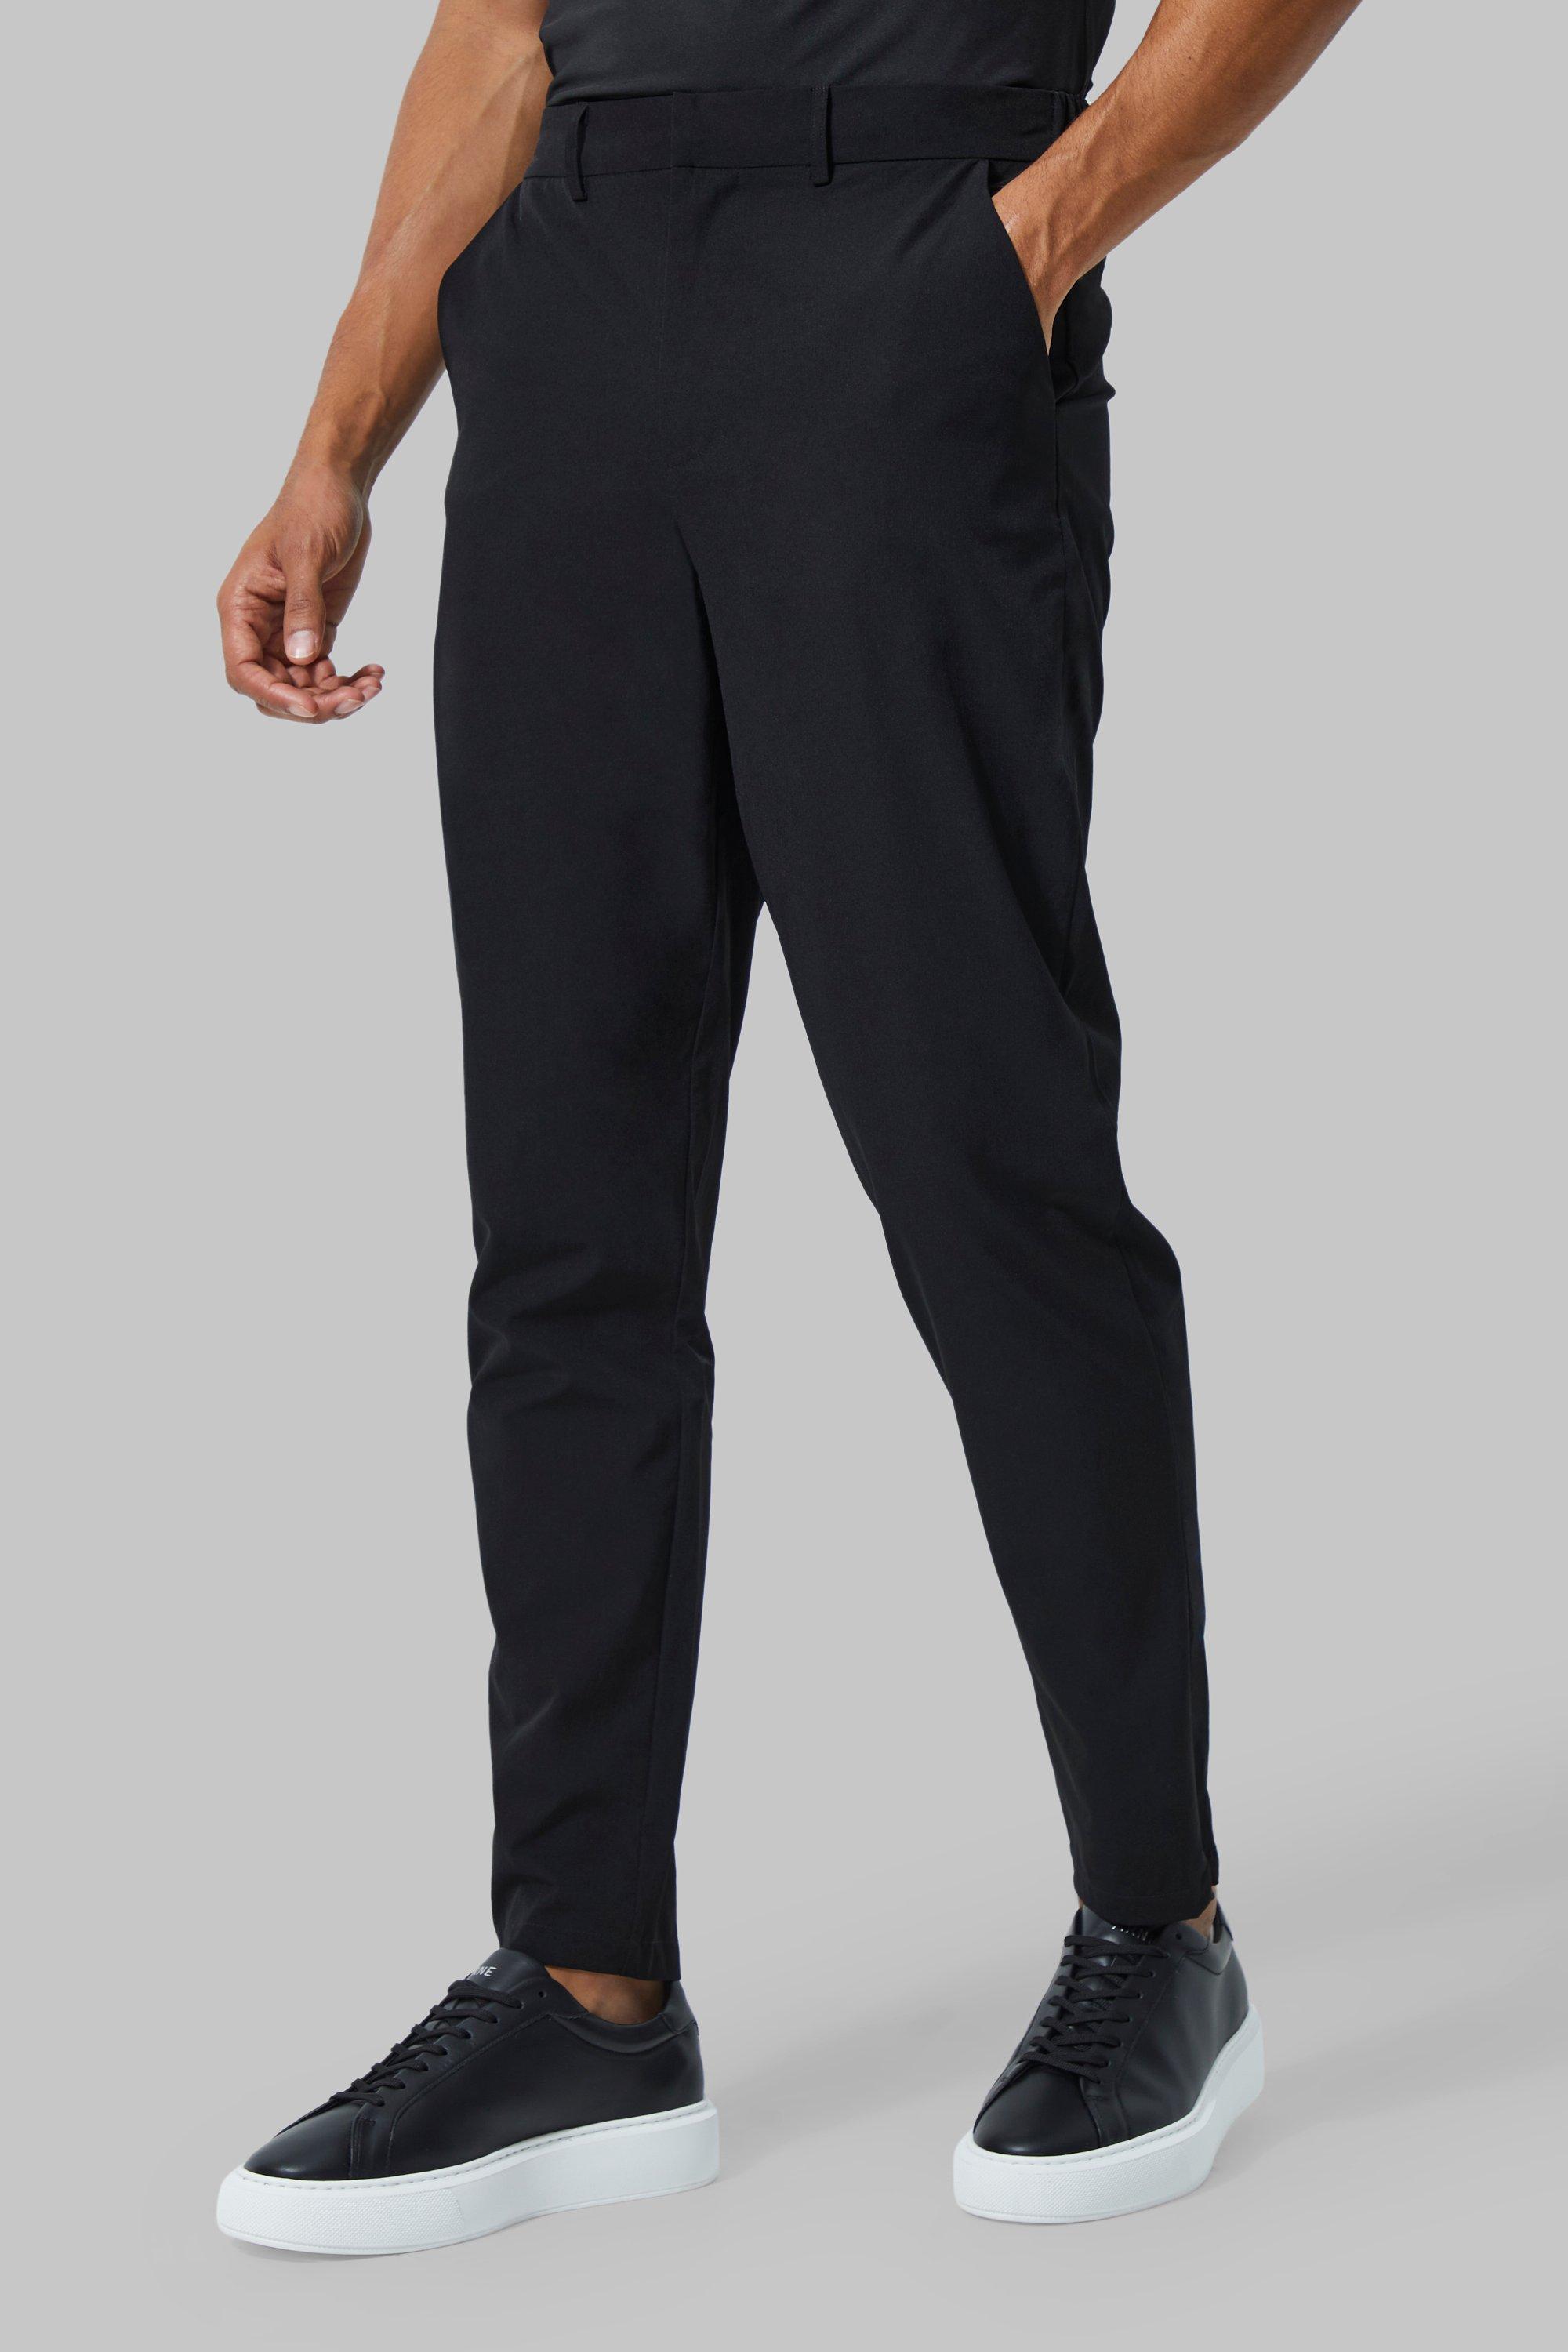 men's man active stretch golf trousers - black - s, black